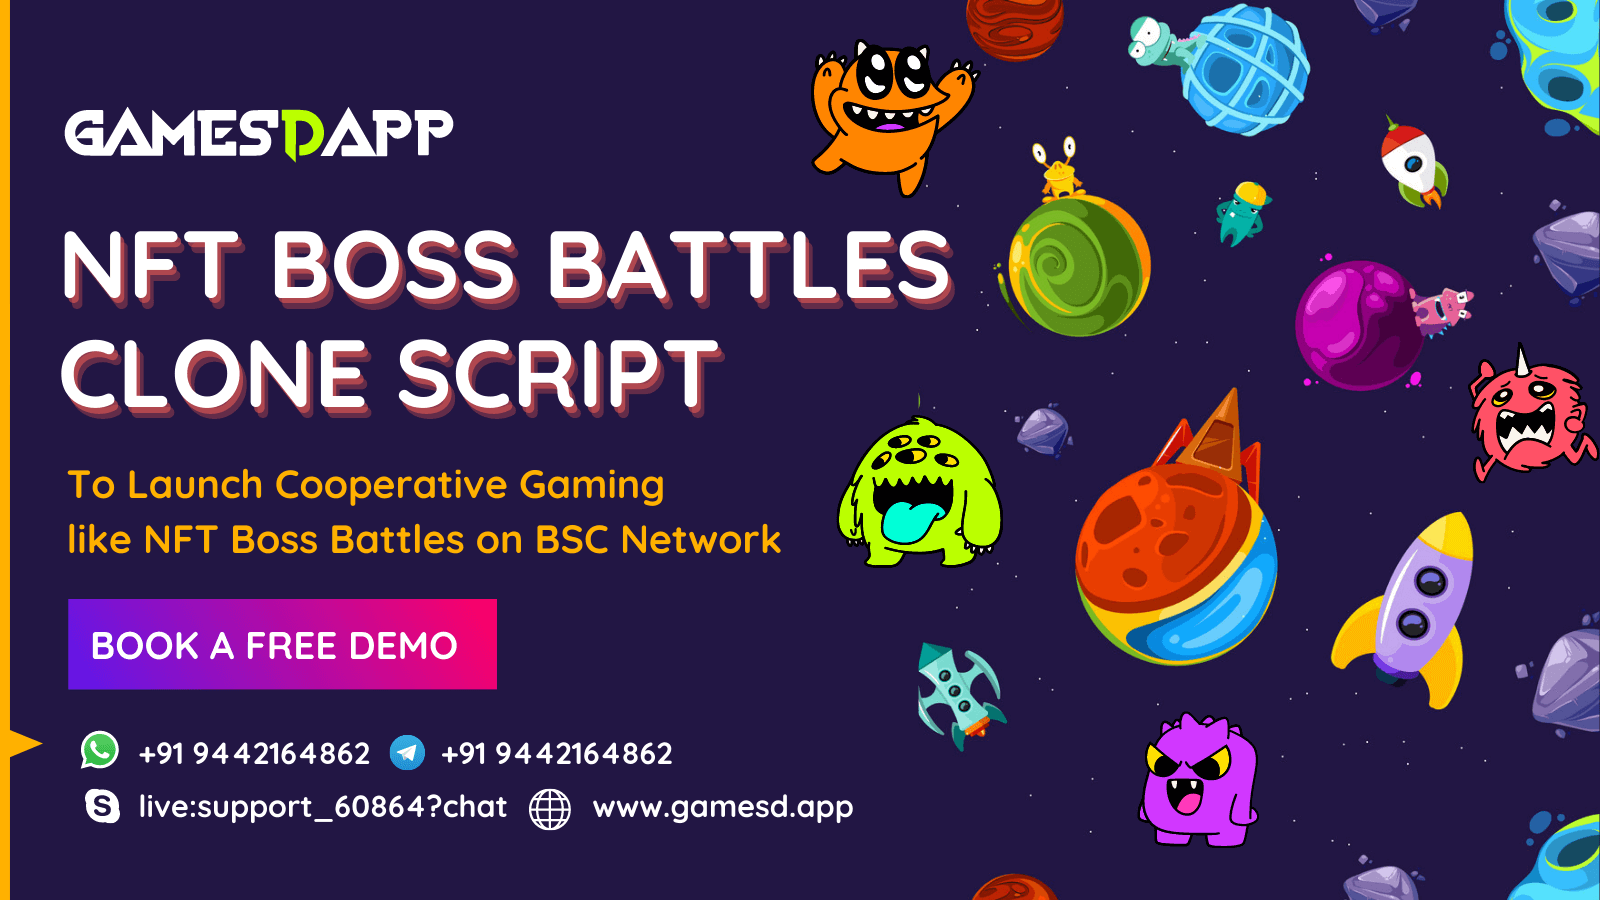 NFT Boss Battles Clone Script - To Launch Cooperative Gaming like NFT Boss Battles on BSC Network